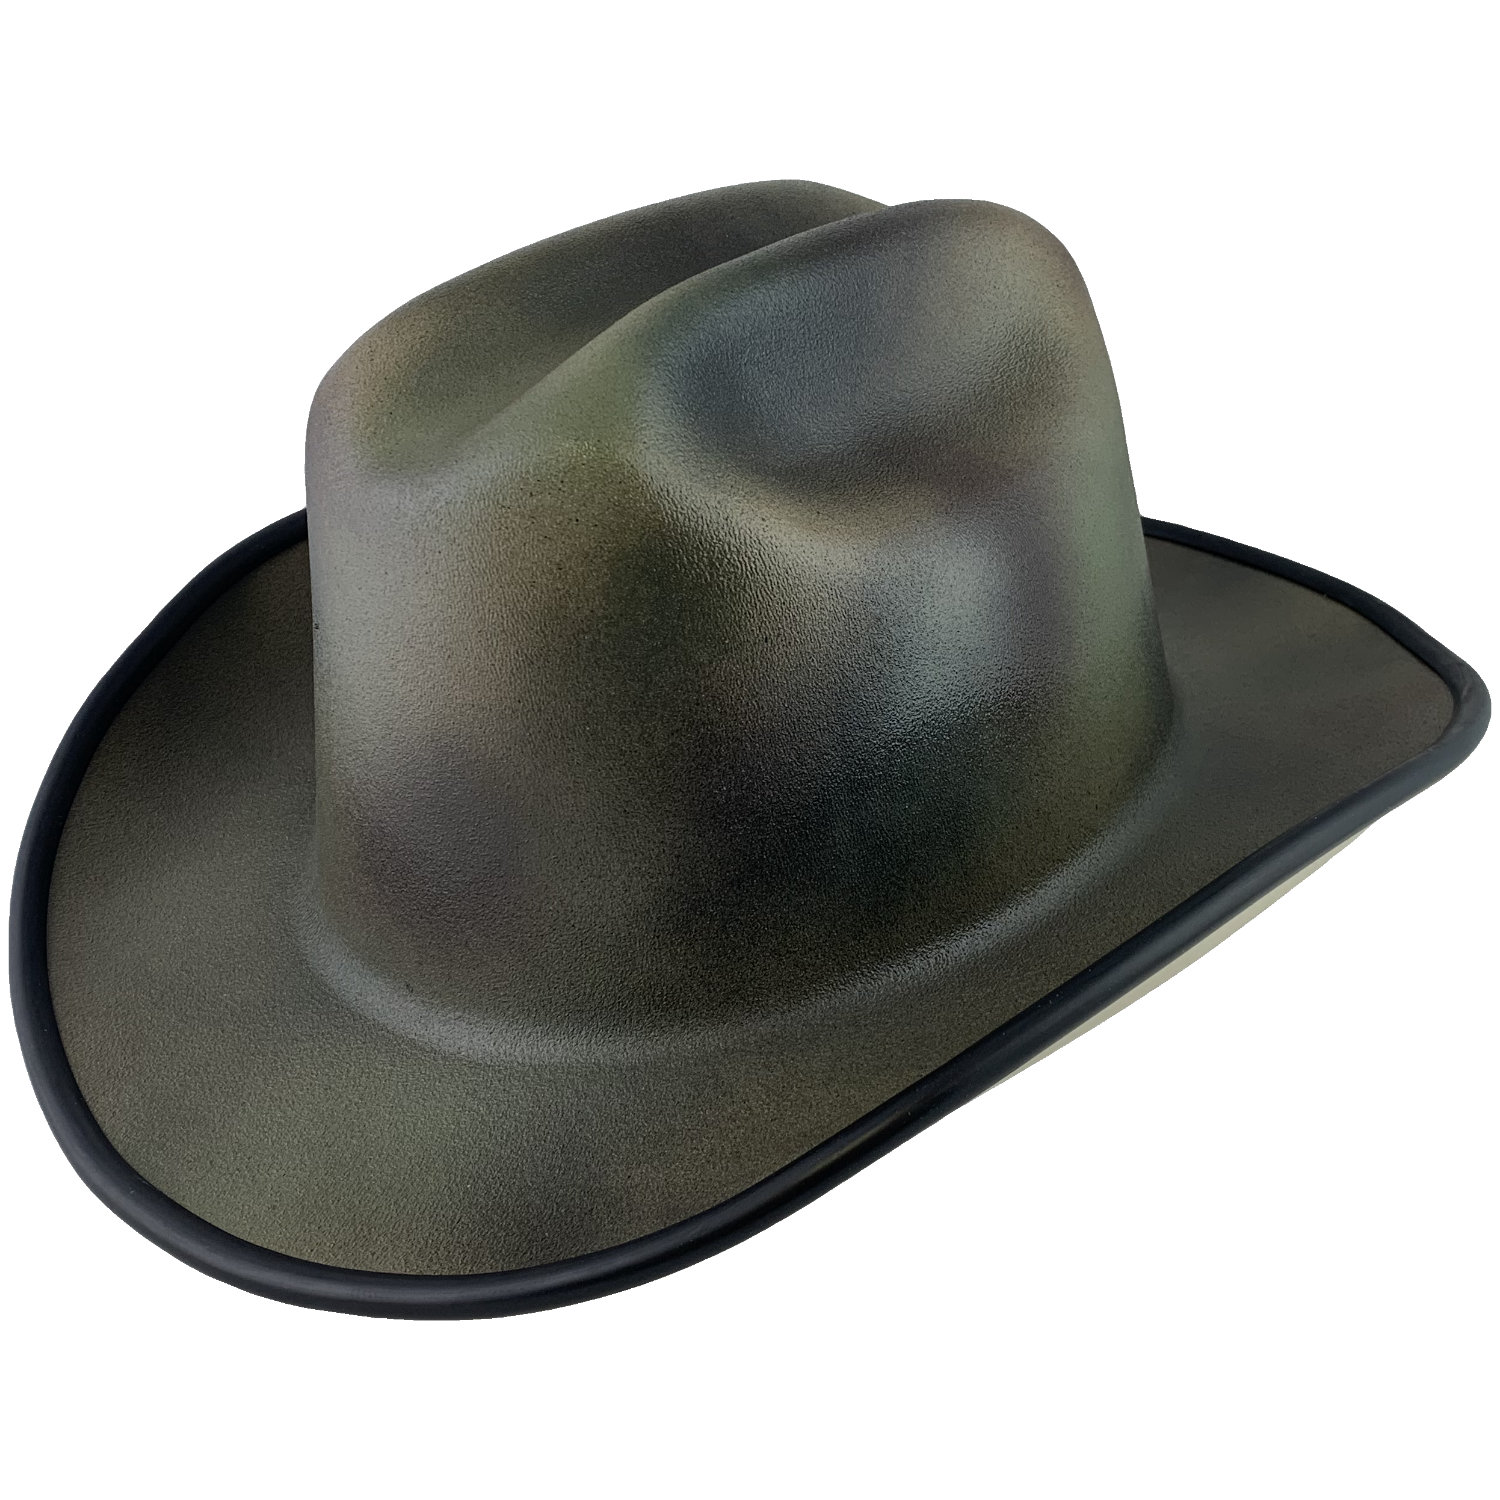 Vulcan Cowboy Style Hard Hat